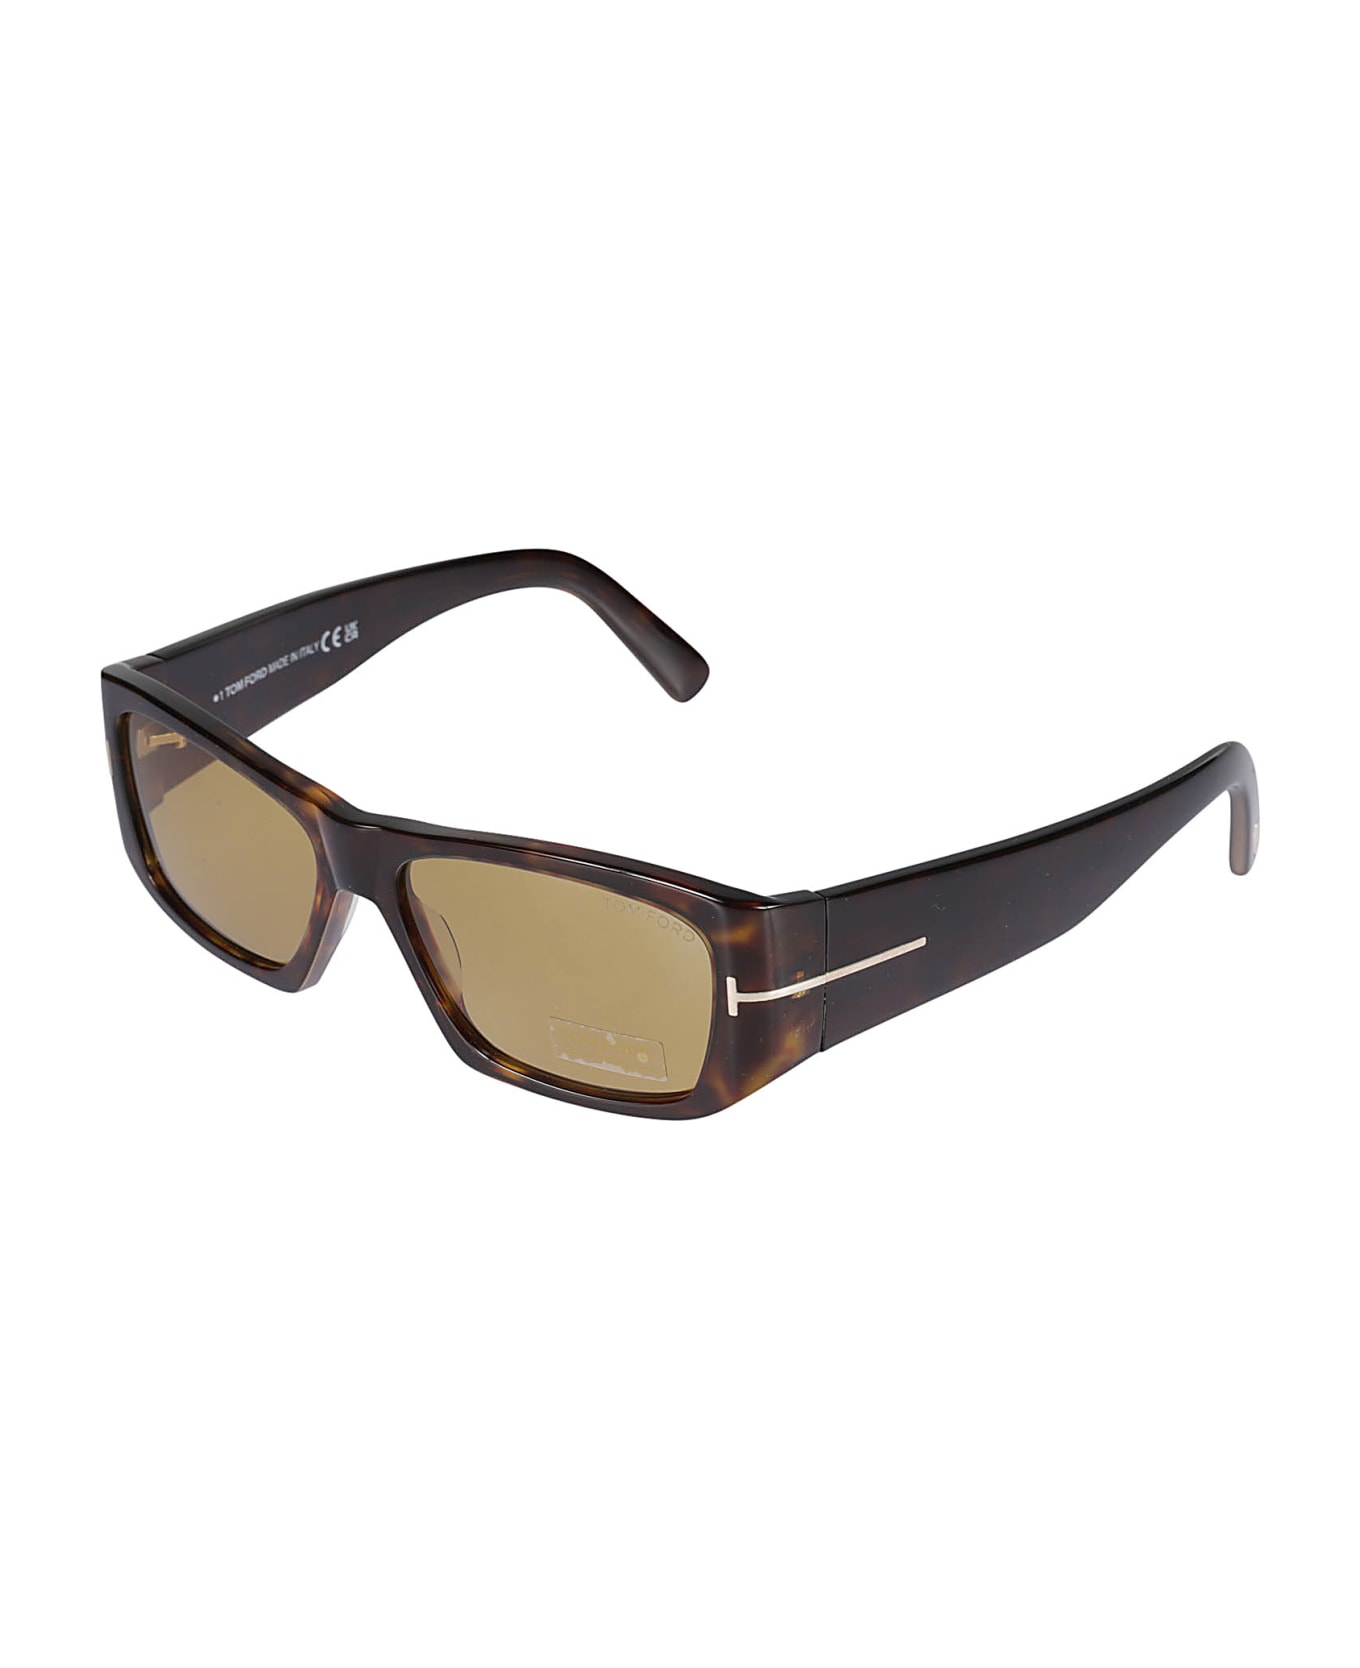 Tom Ford Eyewear Andres-02 Sunglasses - N/A